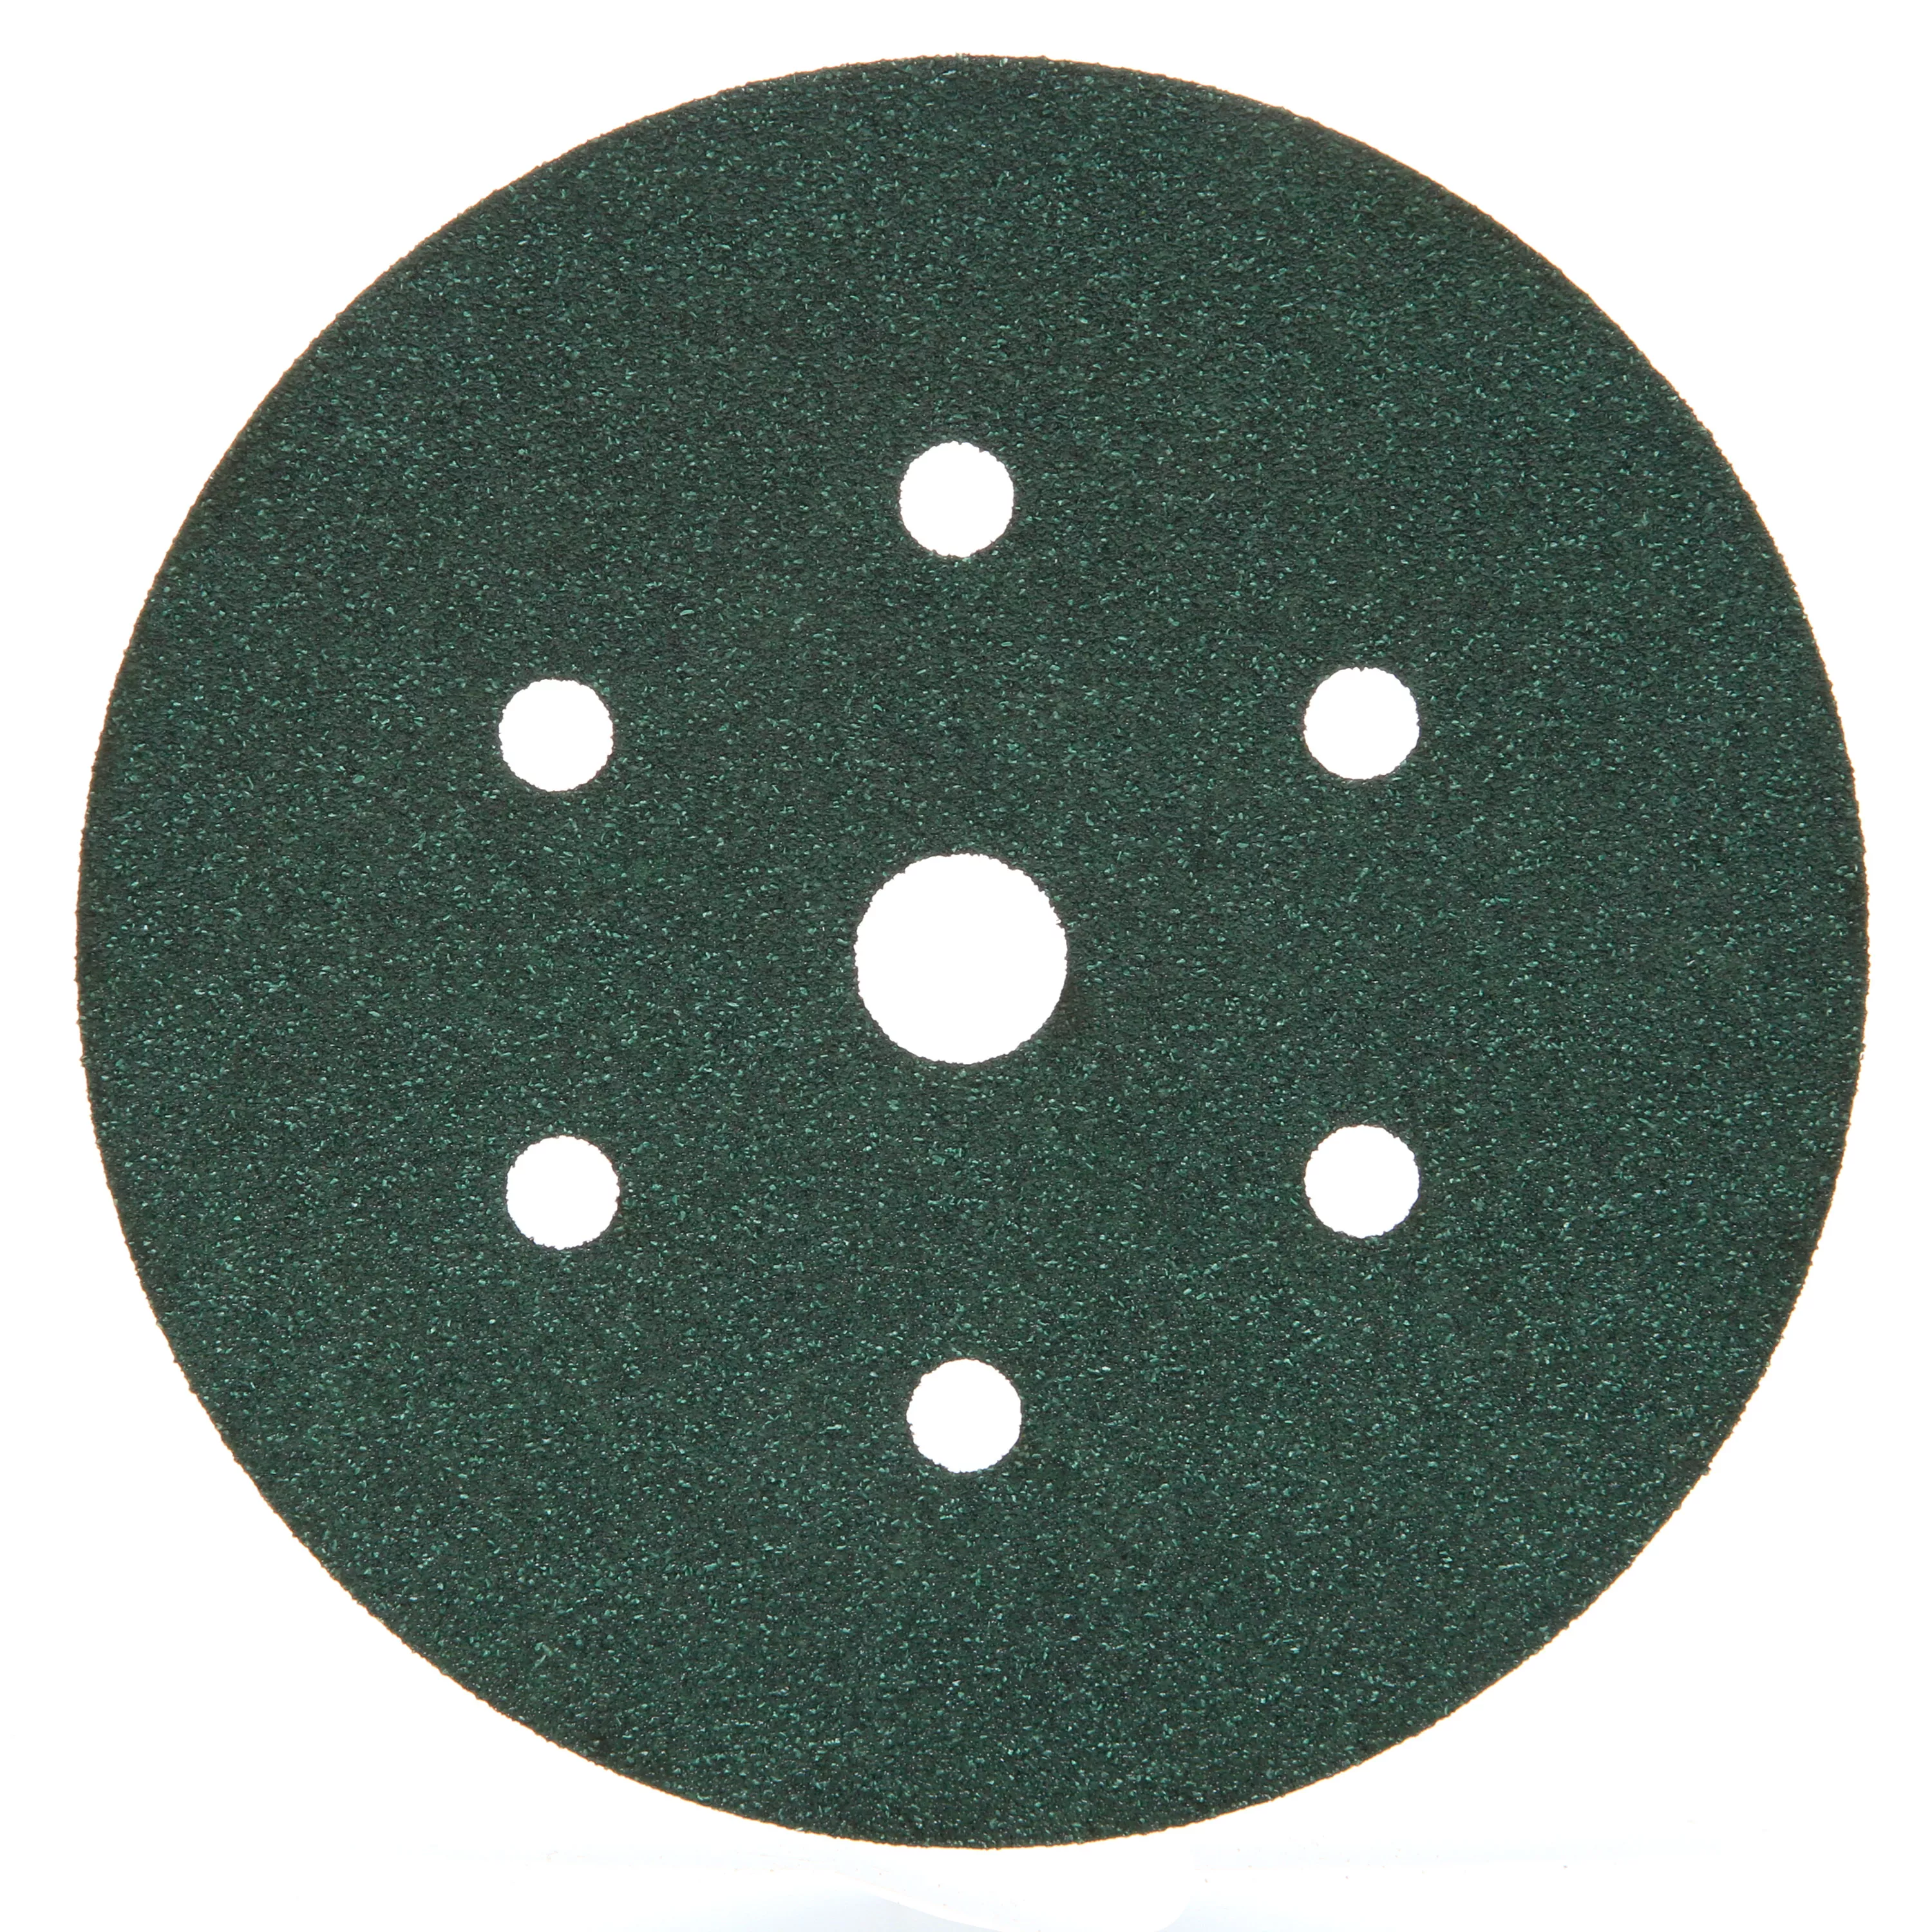 SKU 7100009351 | 3M™ Green Corps™ Hookit™ Disc Dust Free